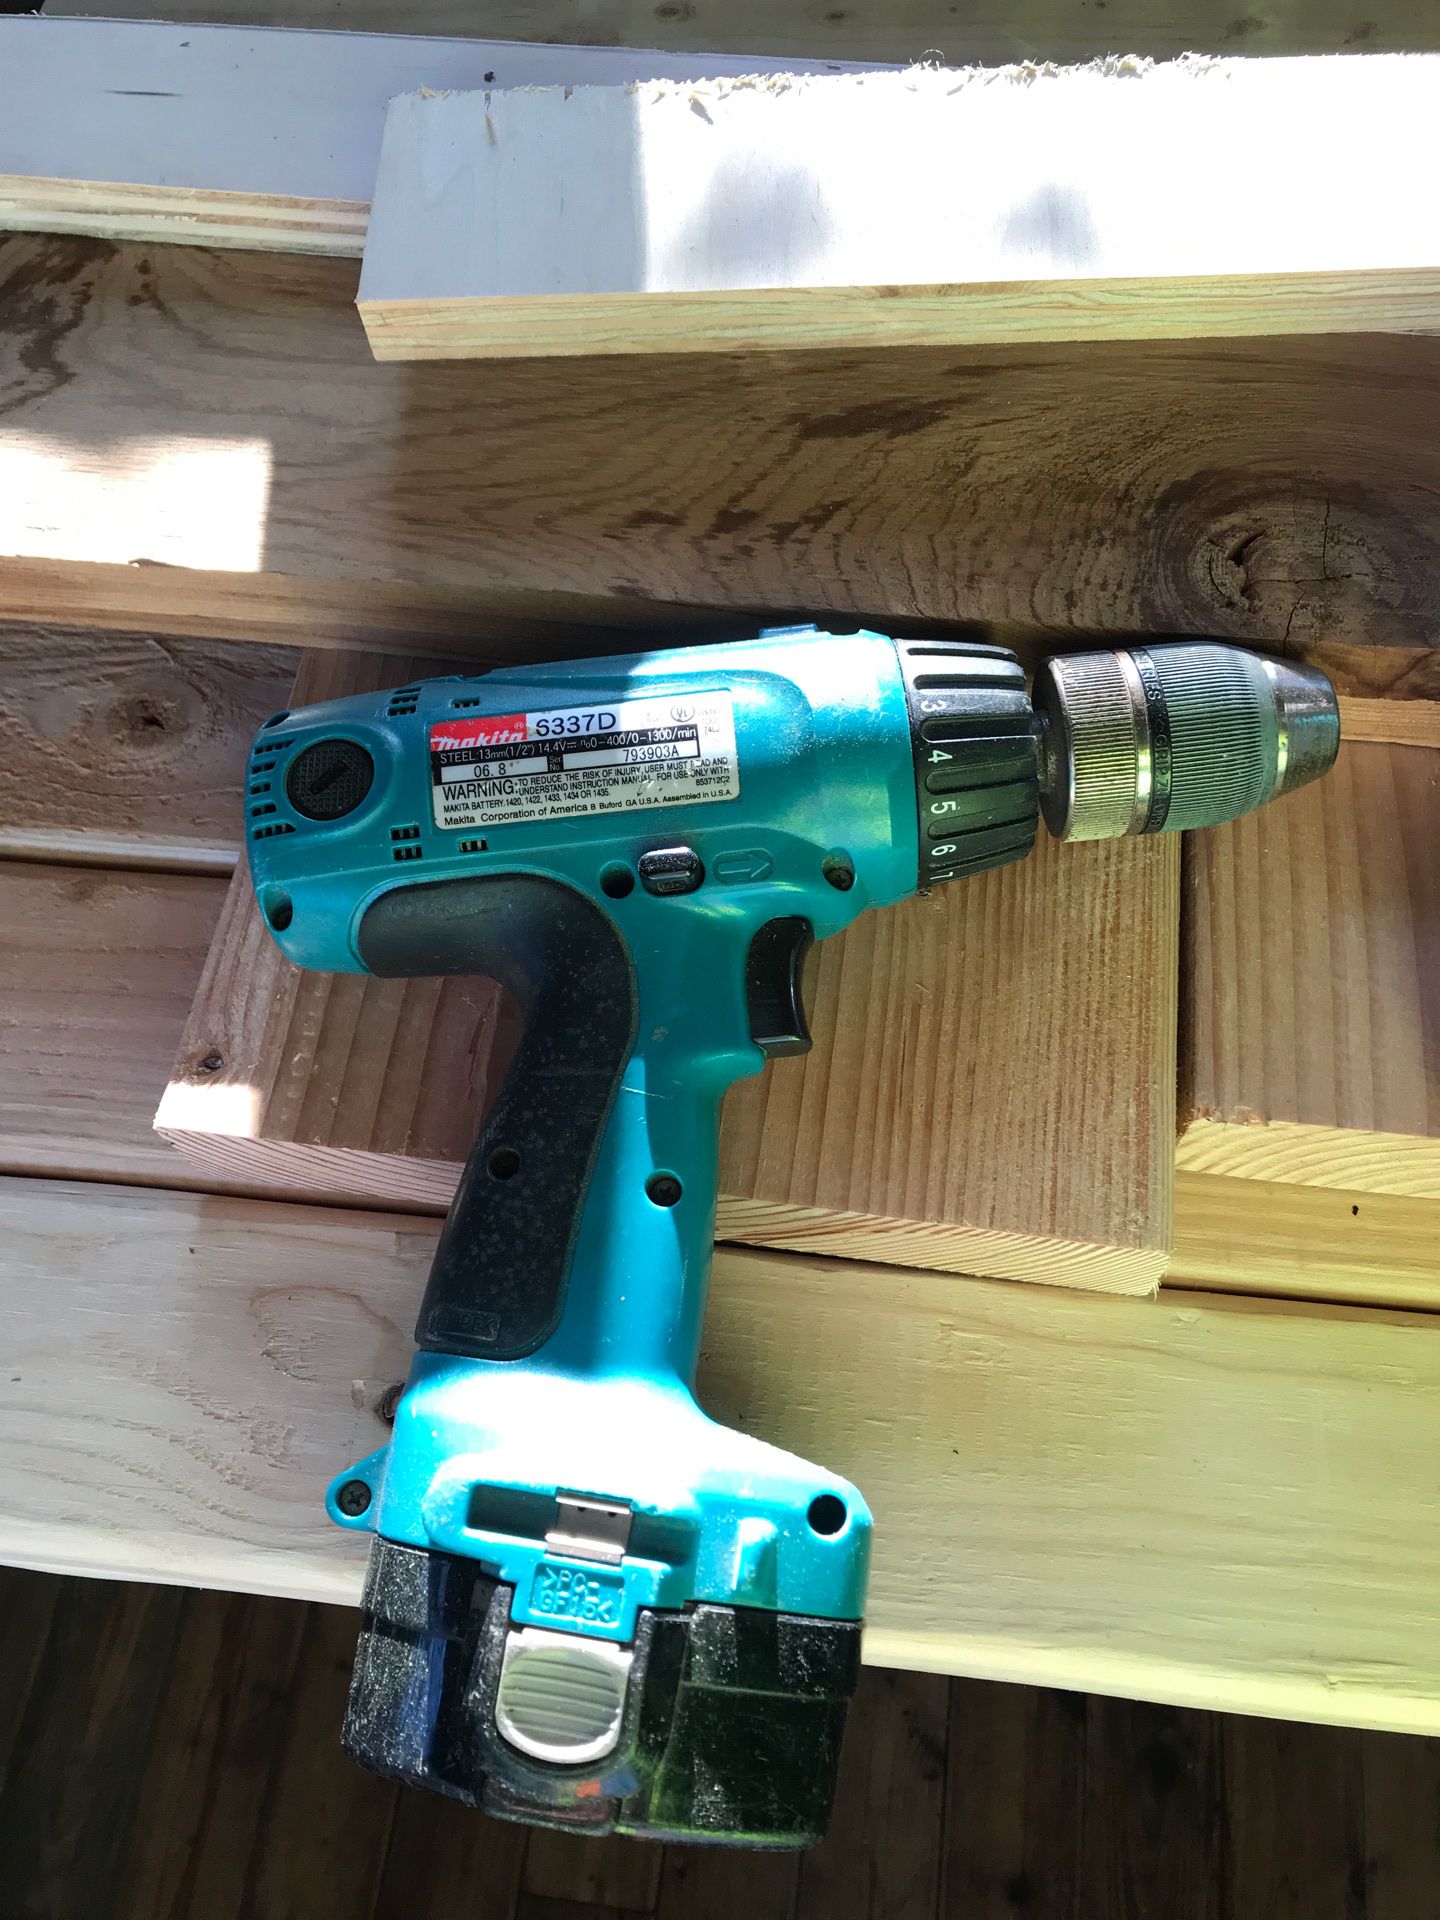 Mikita 6337D 14.4 volt cordless drill